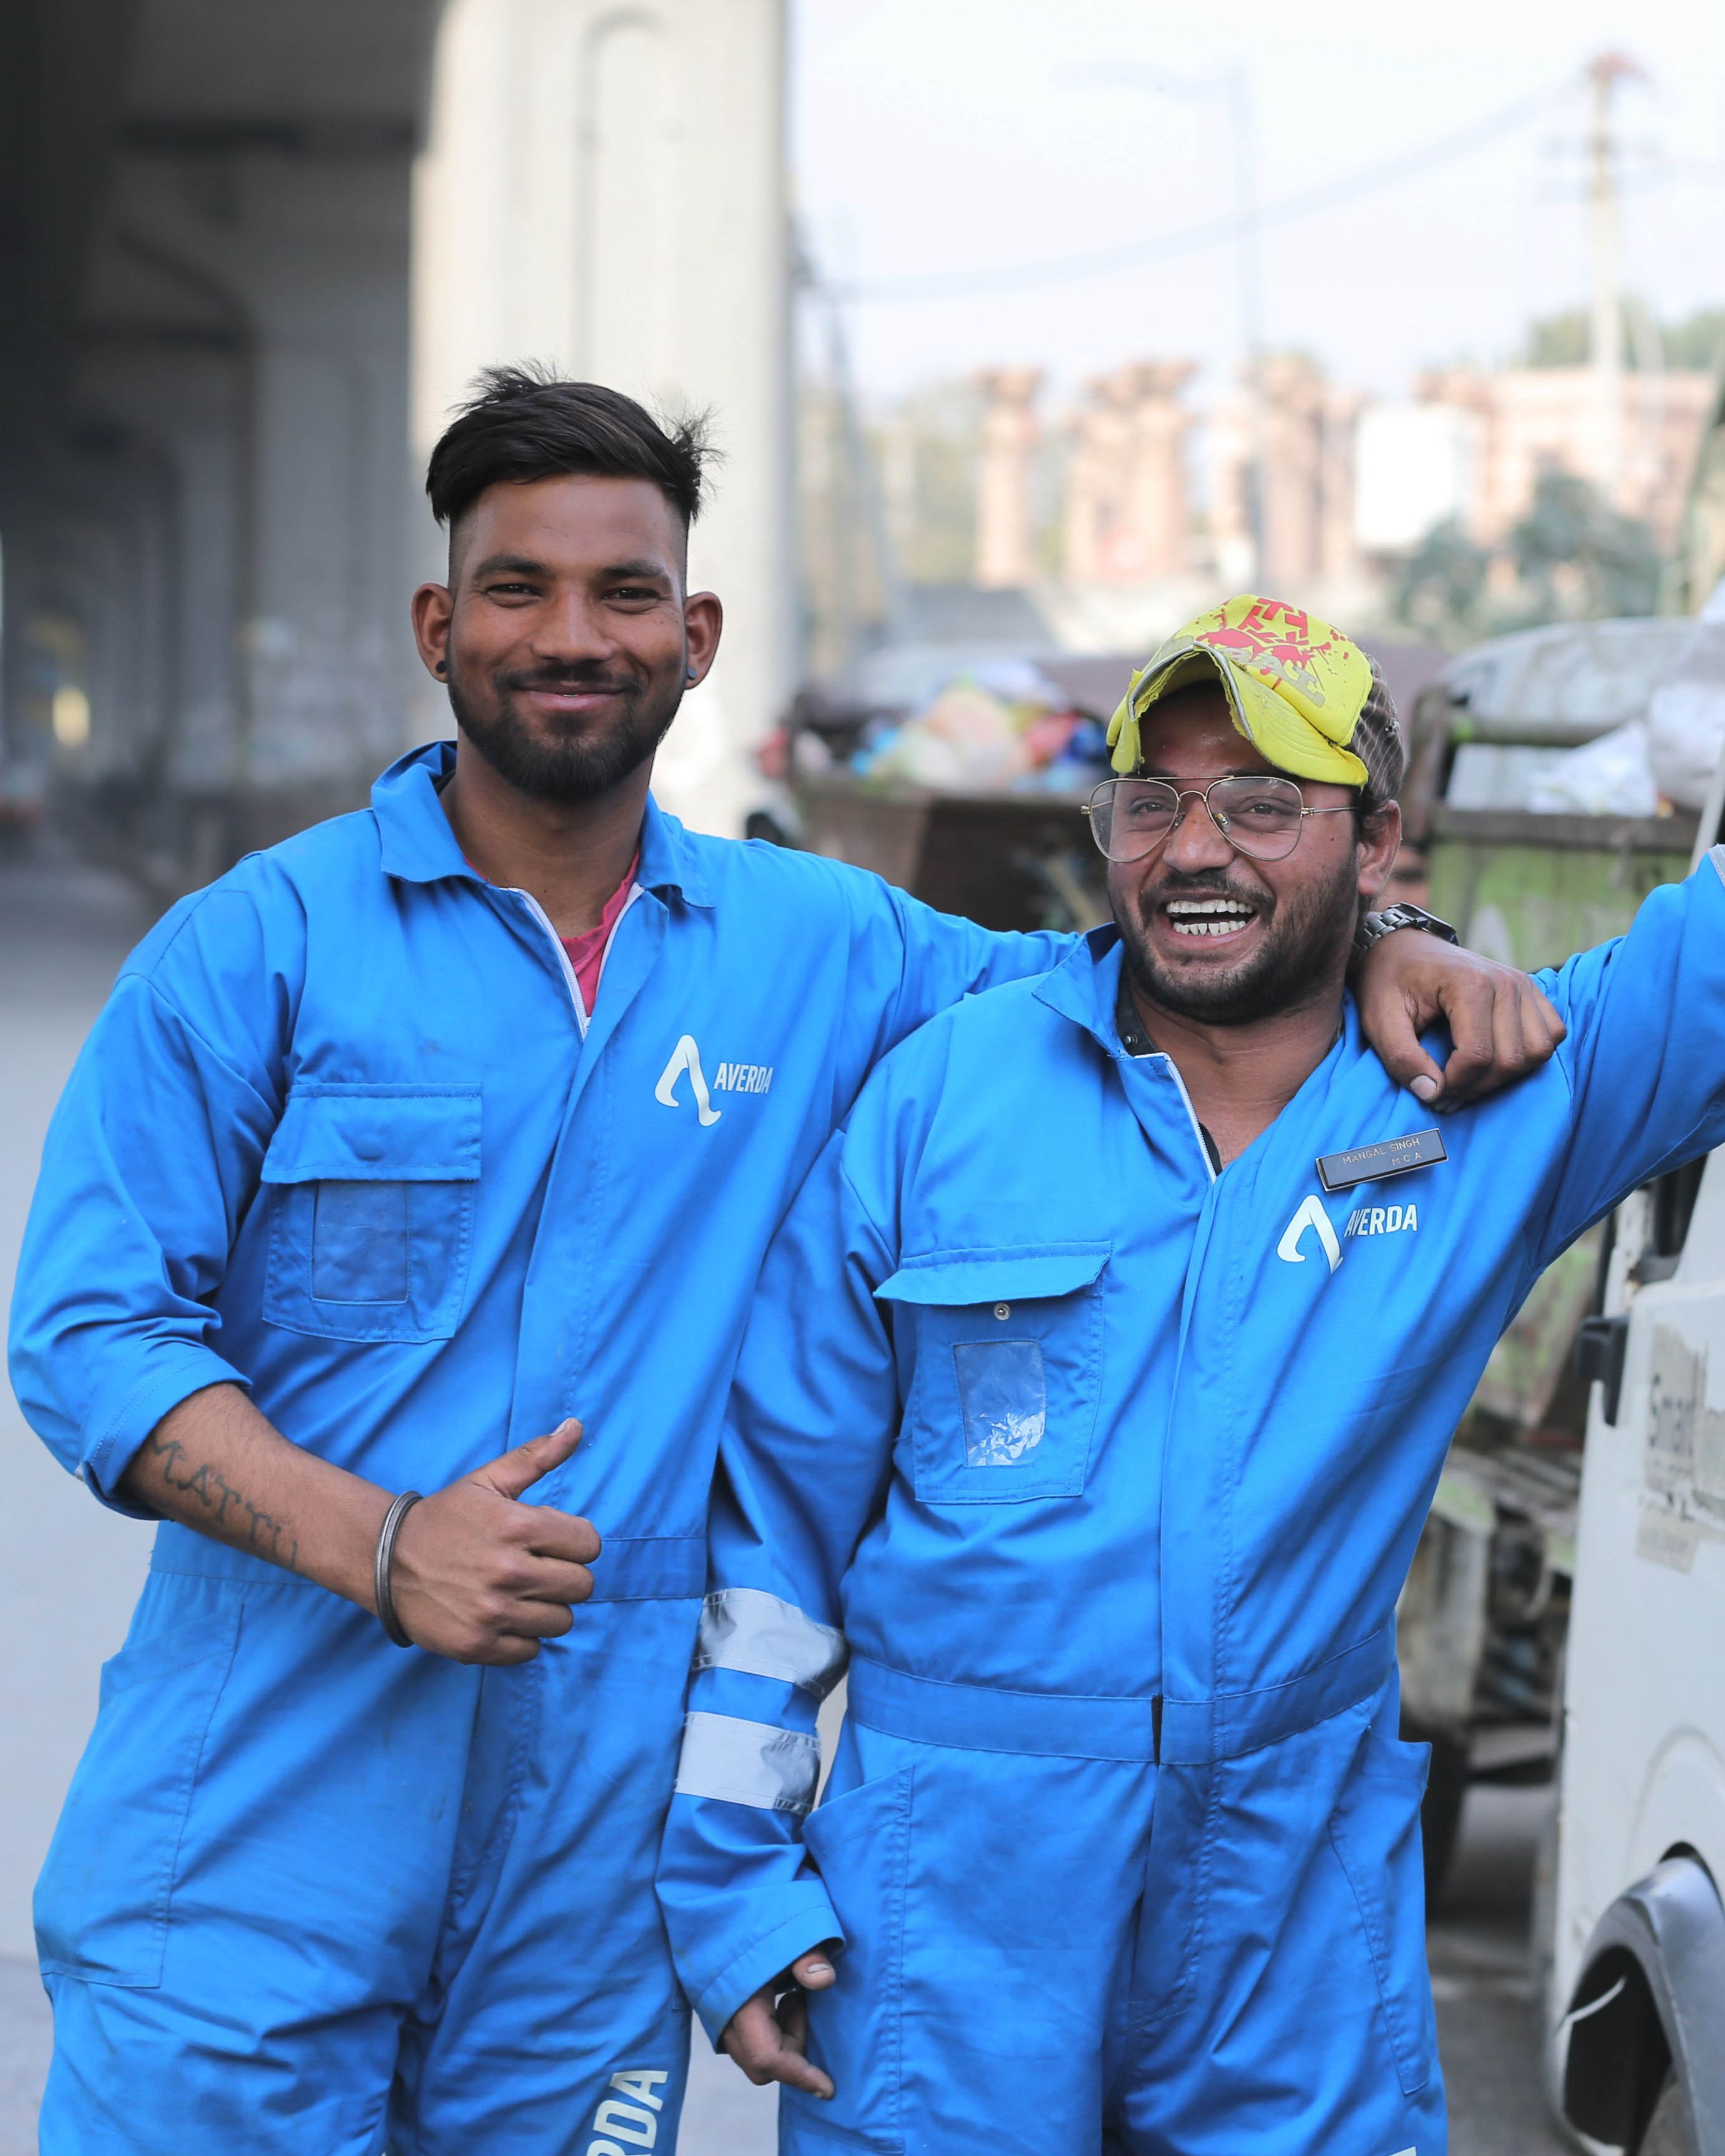 Averda employees off duty in Amritsar